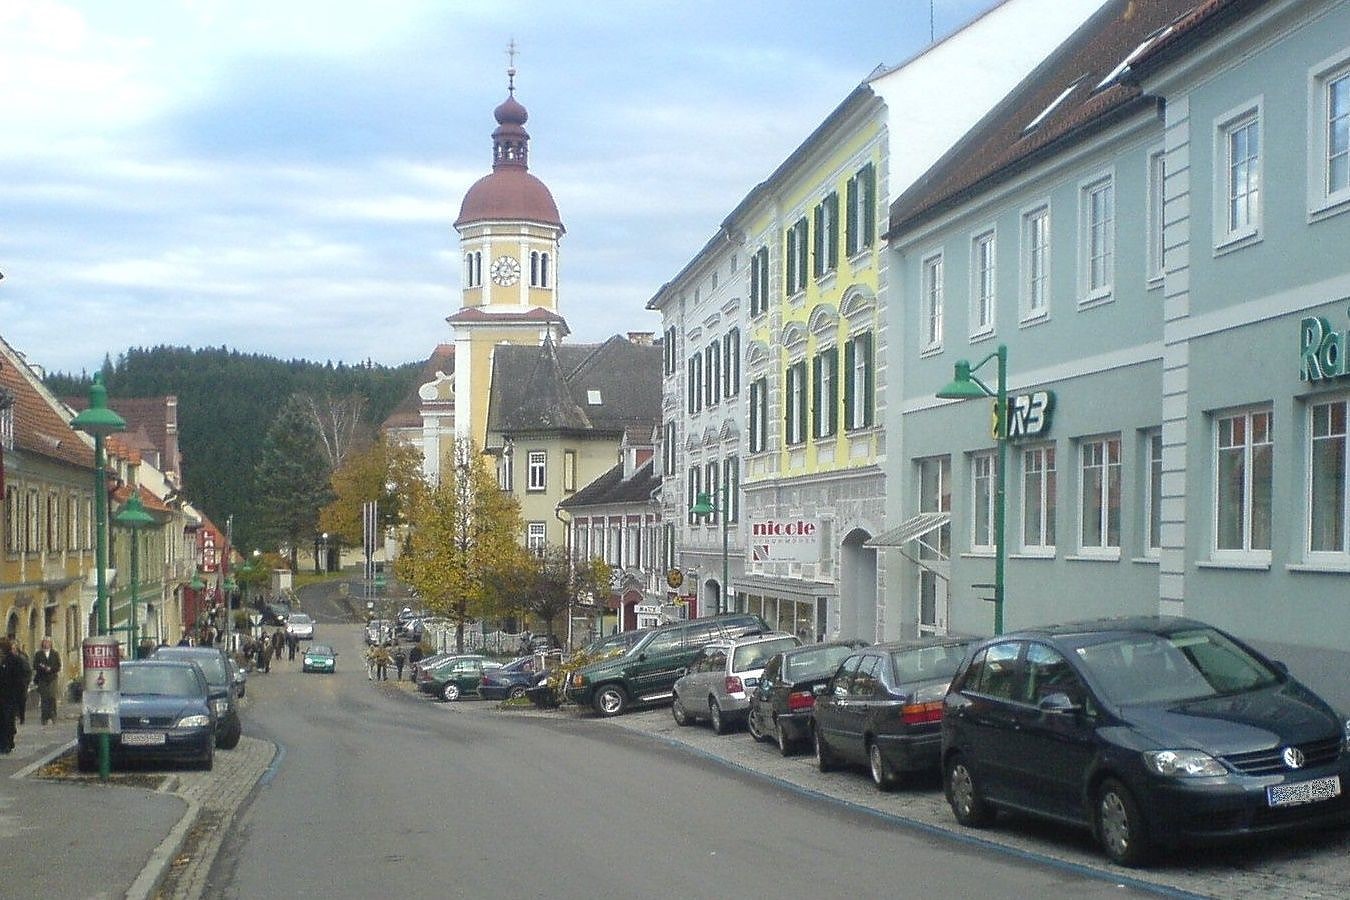 Birkfeld, Austria